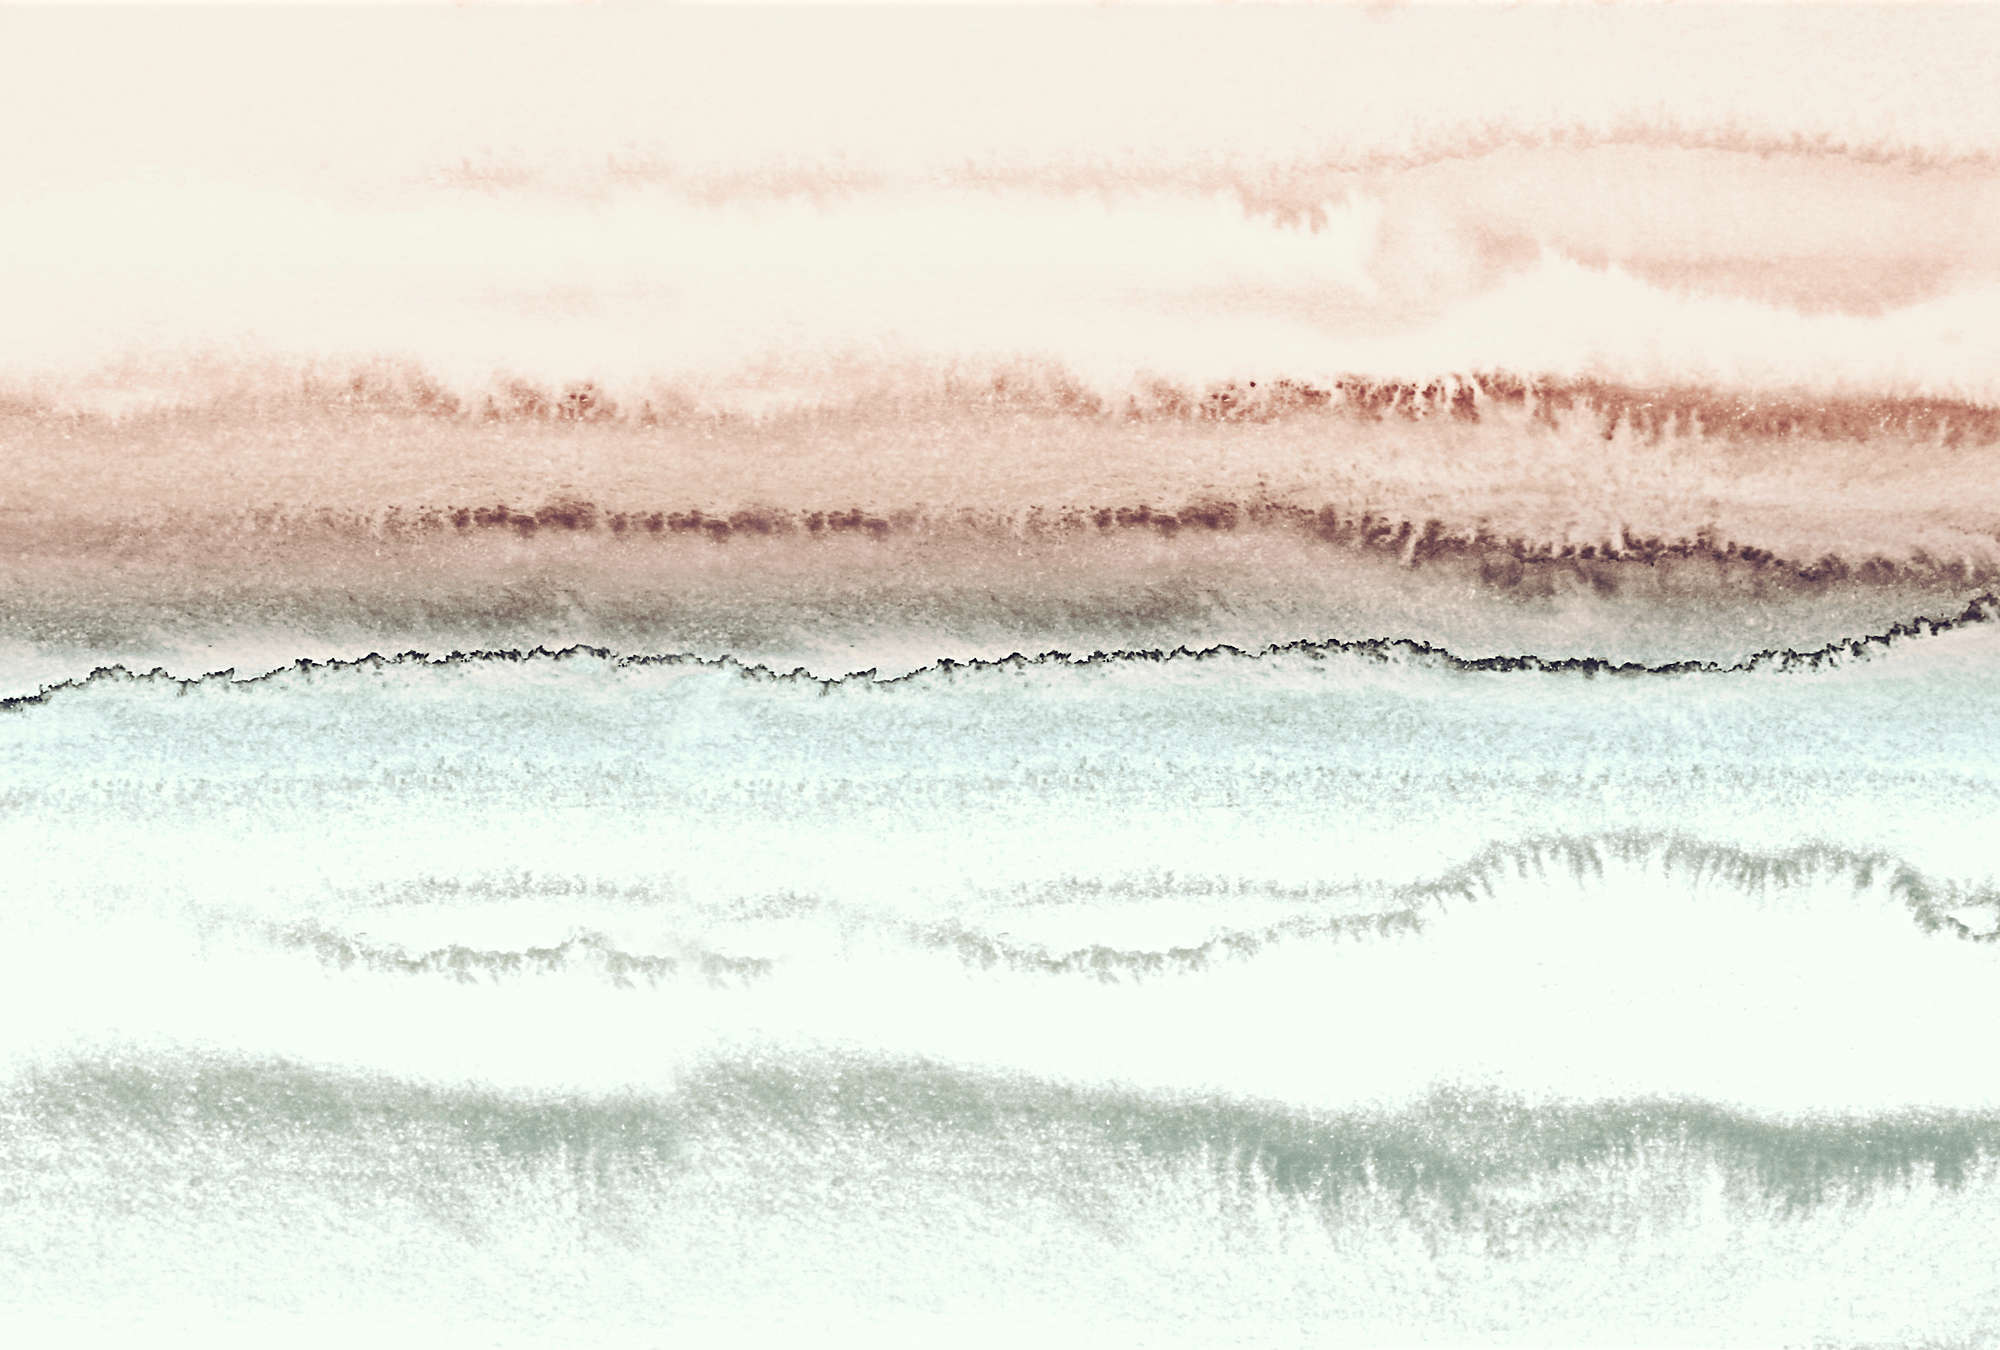             Aquarell Fototapete mit abstrakter Landschaft & Farbverlauf
        